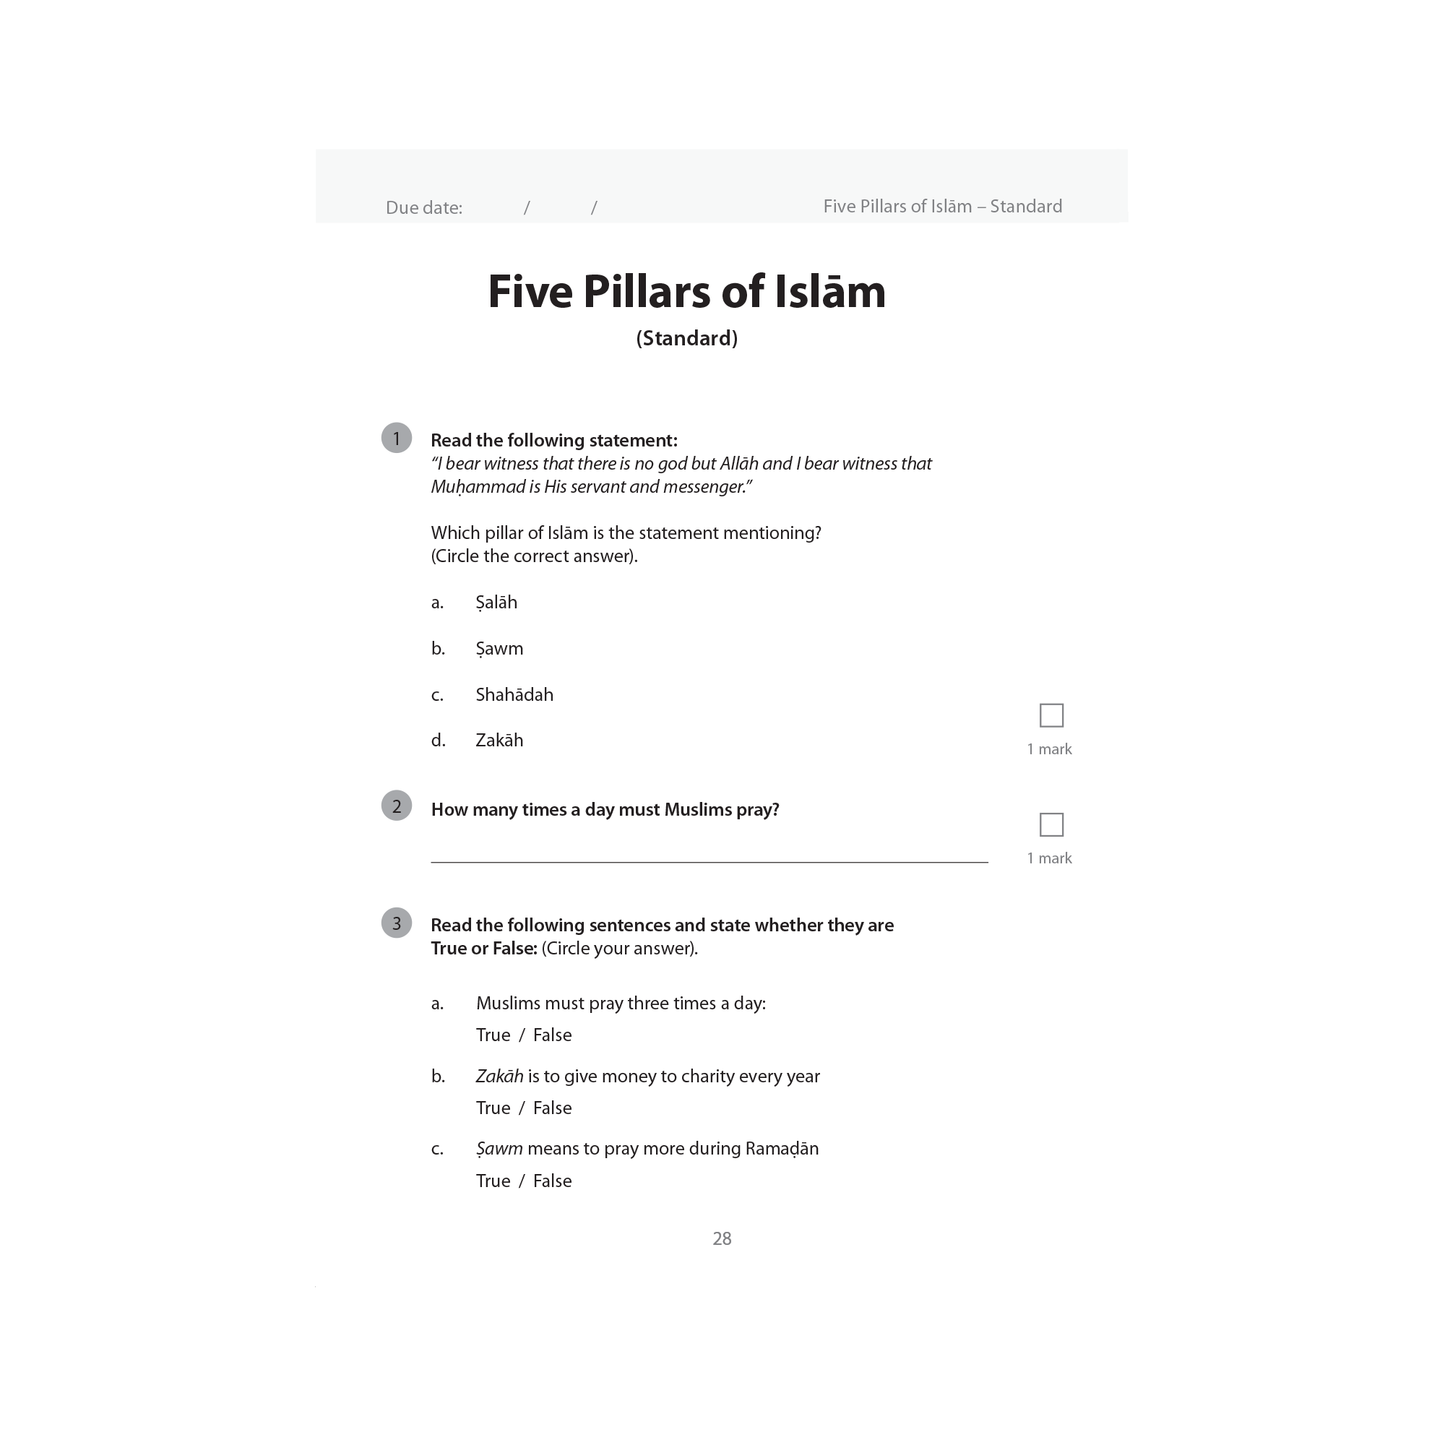 Islamic Studies: Workbook 2 – Learn about Islam Series by Safar